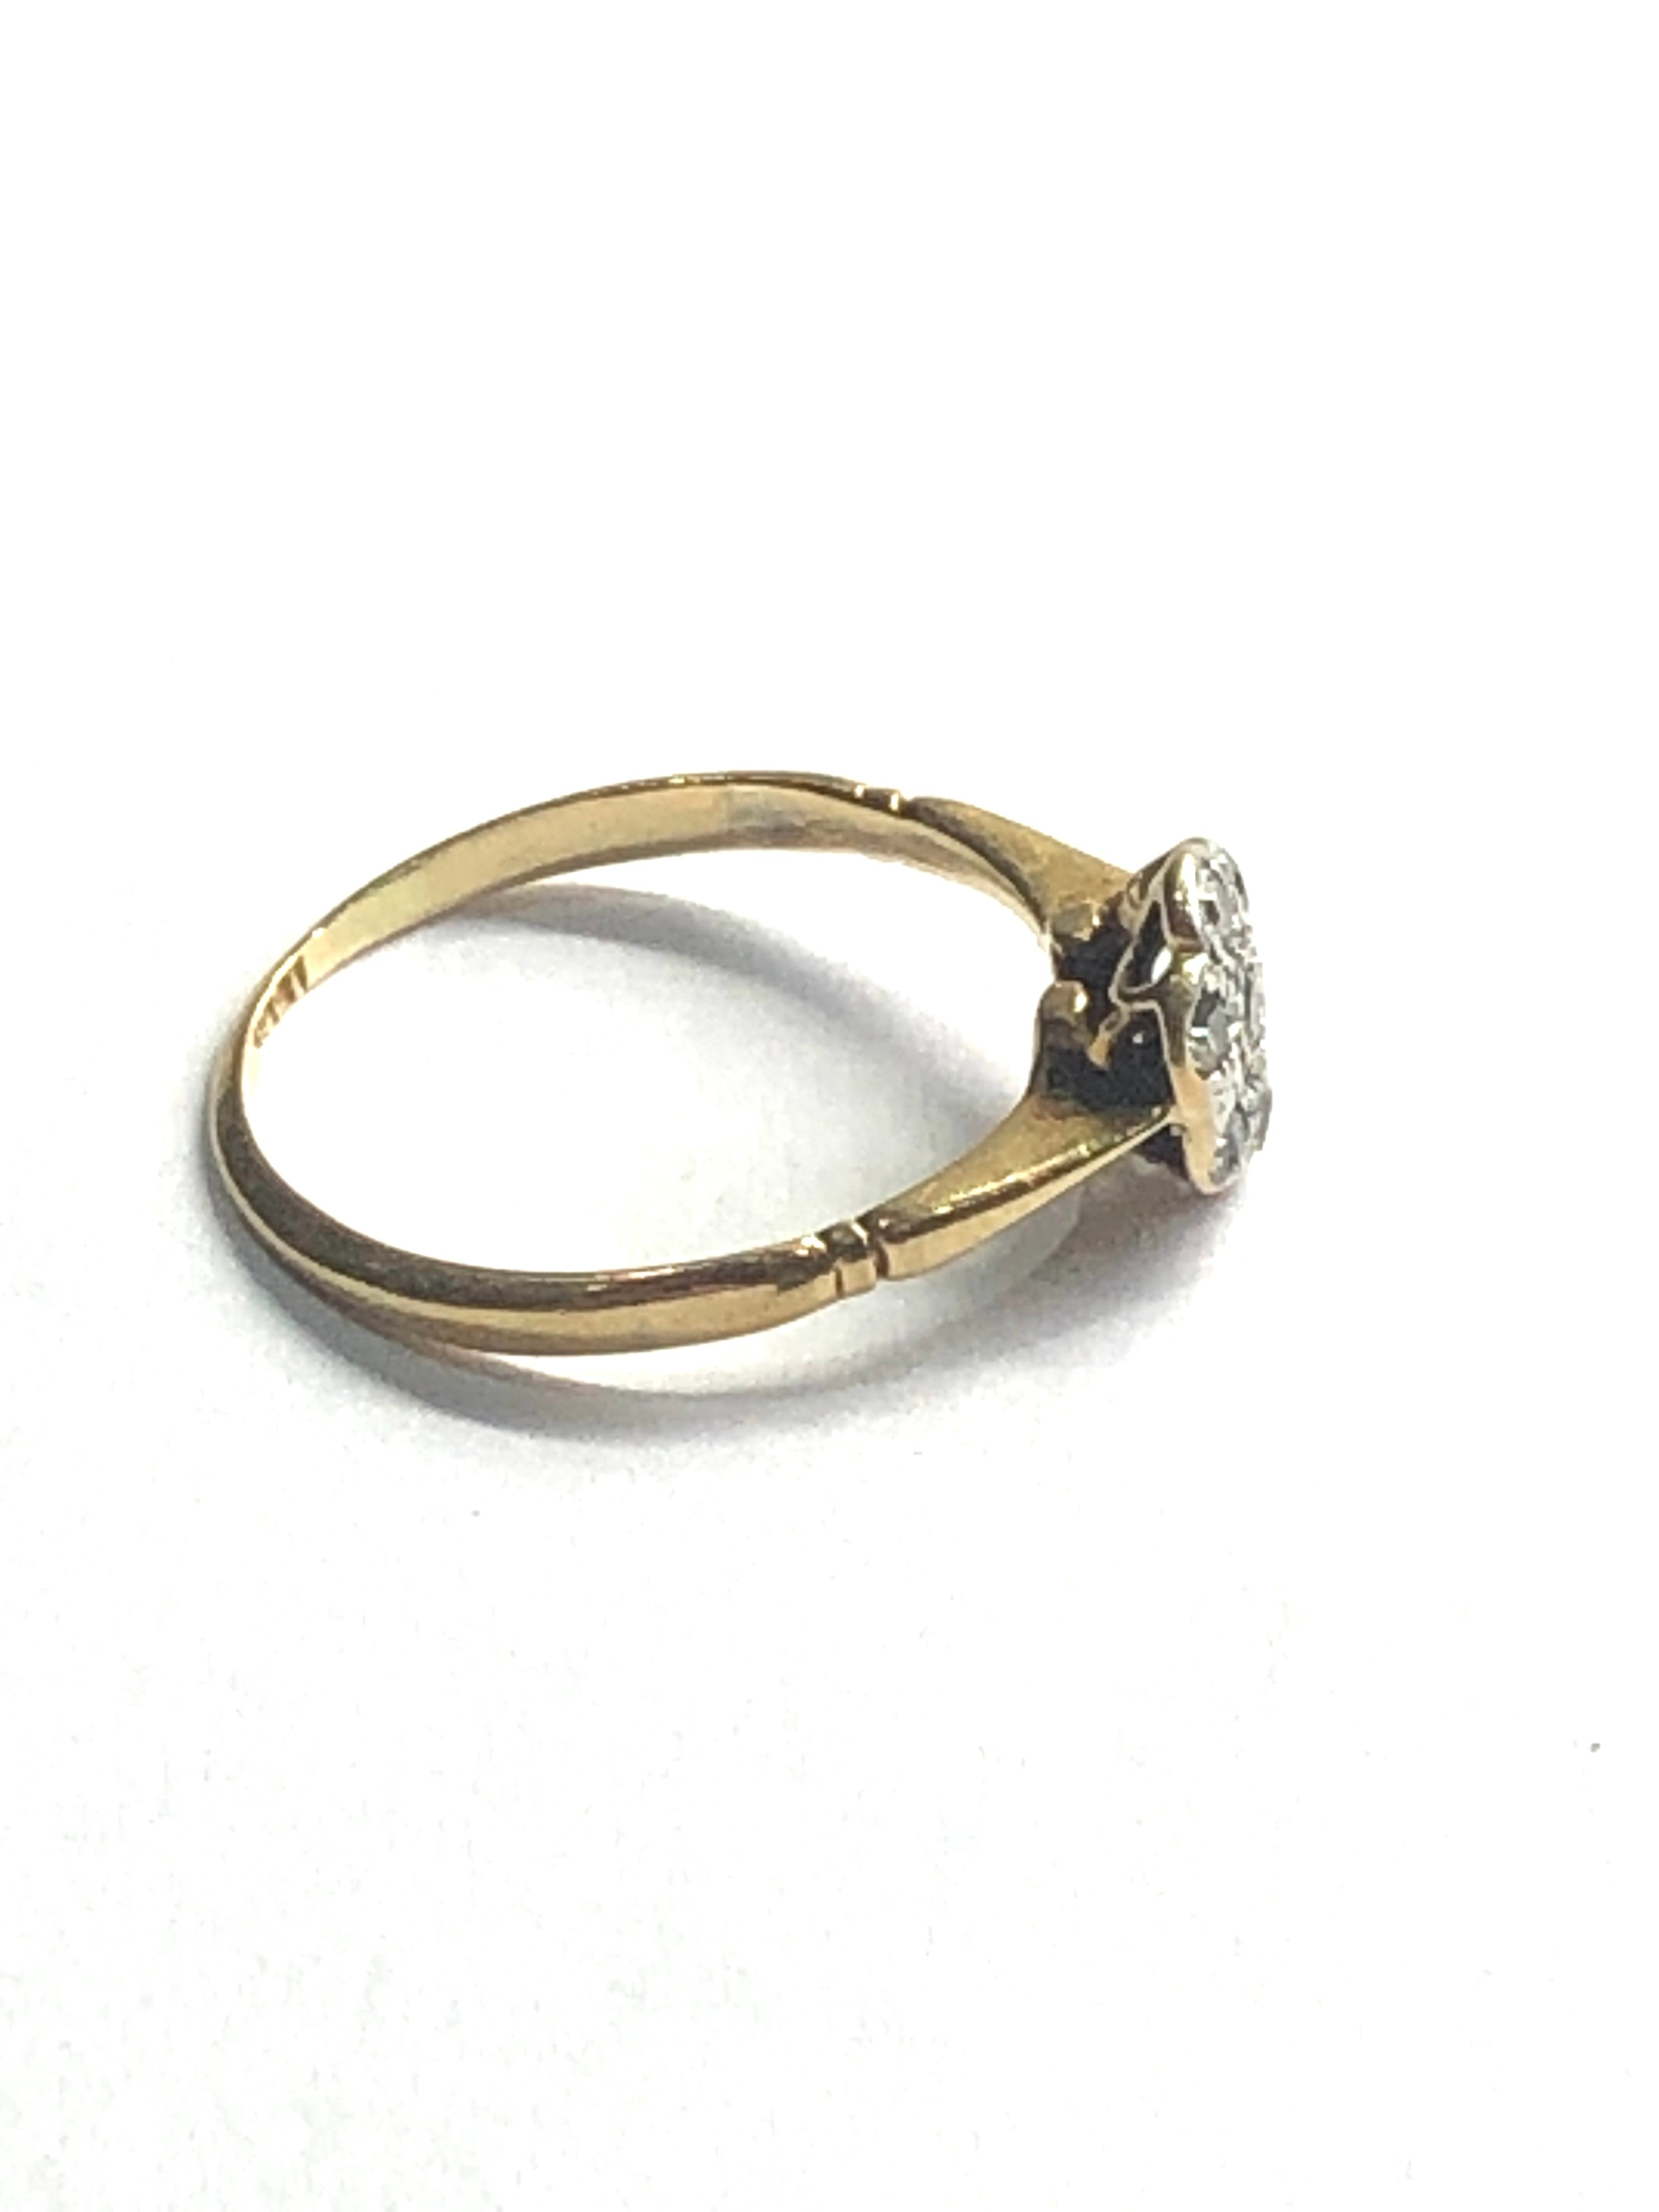 Antique 18ct gold diamond ring 1.5g - Image 2 of 2